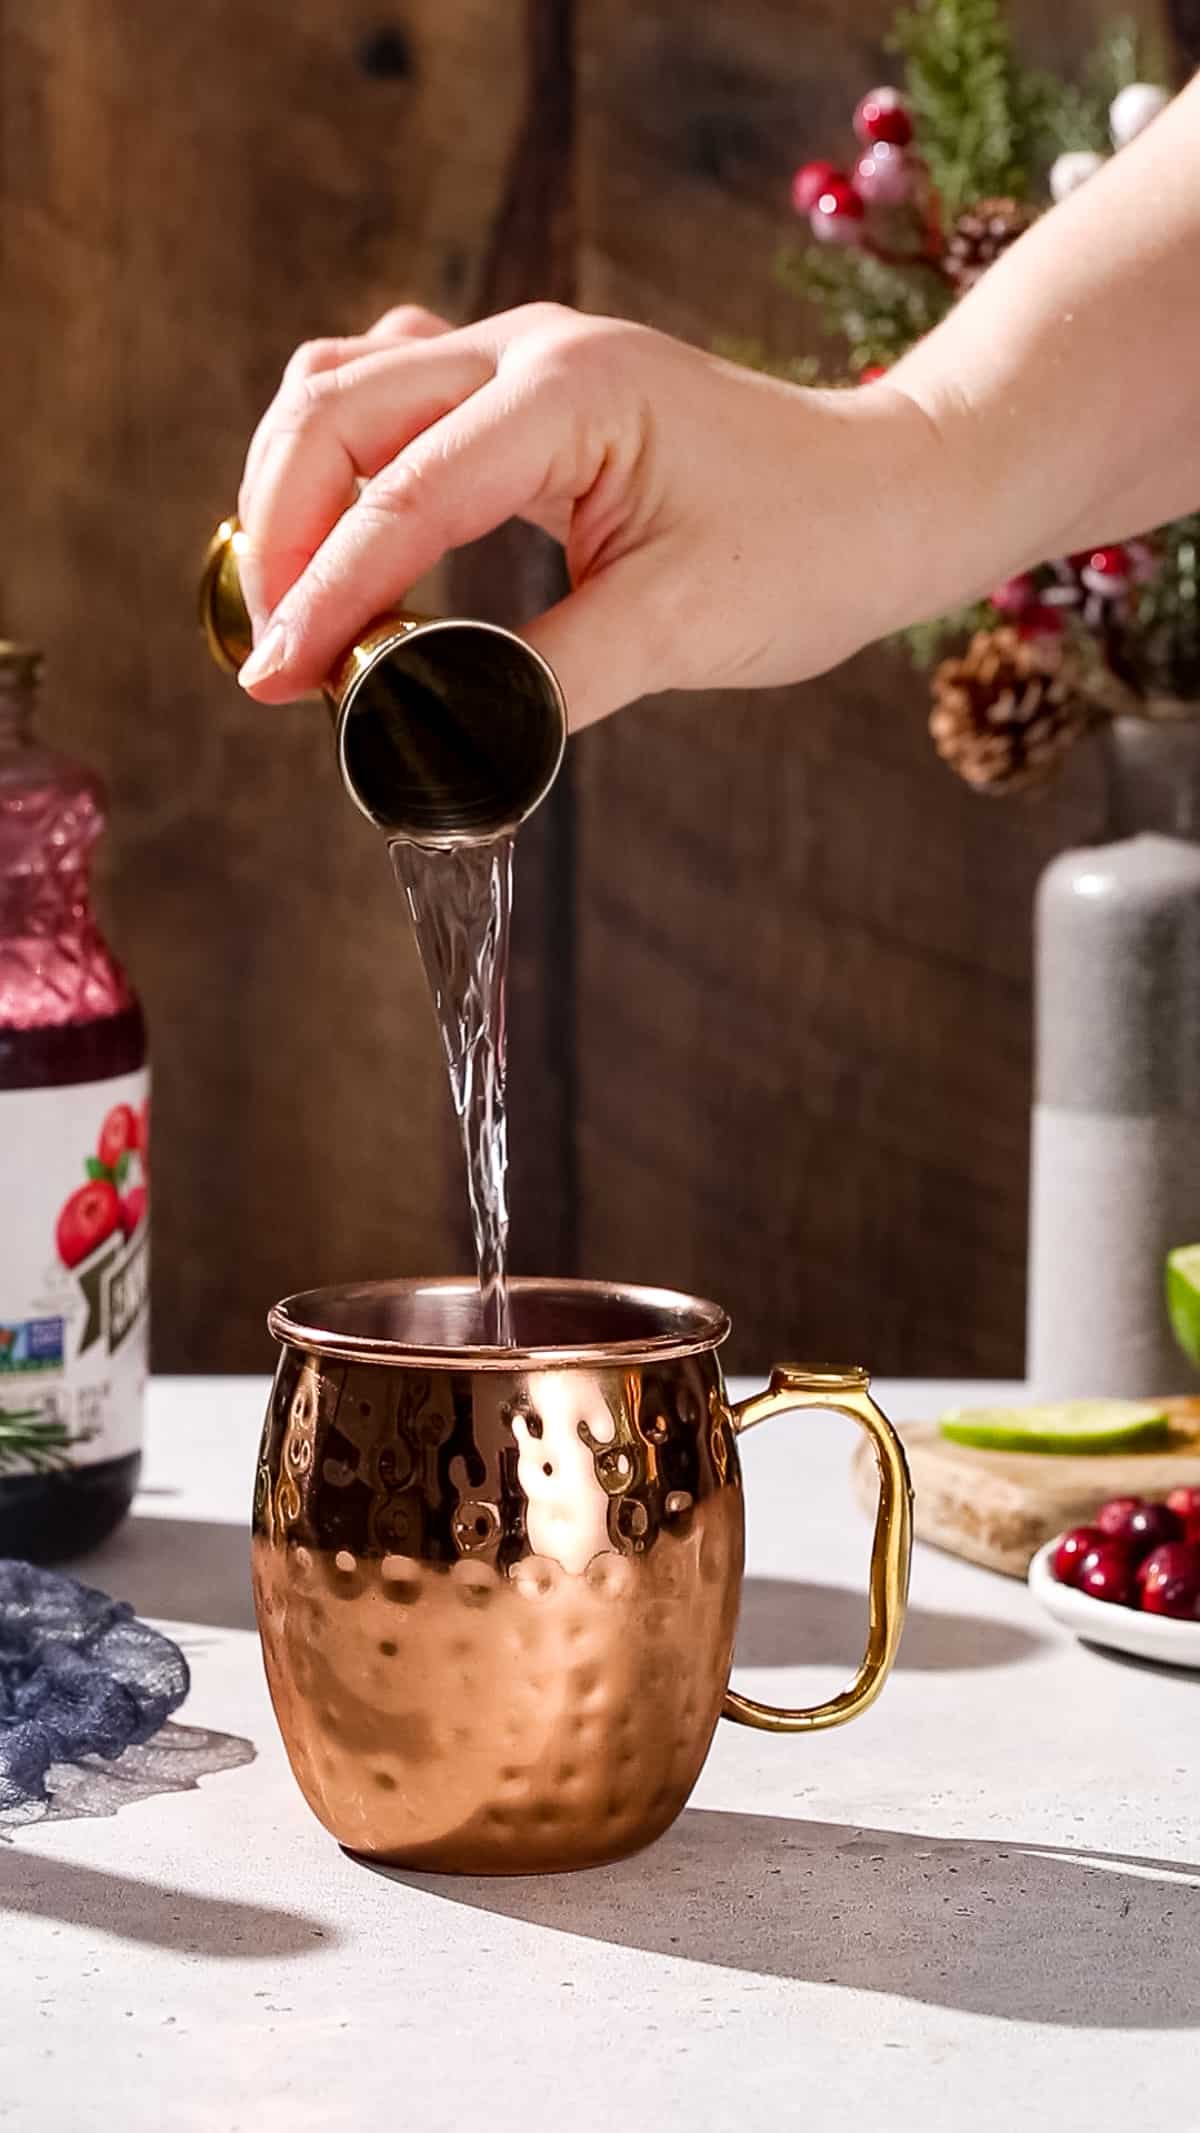 Hand pouring vodka into a copper mug.